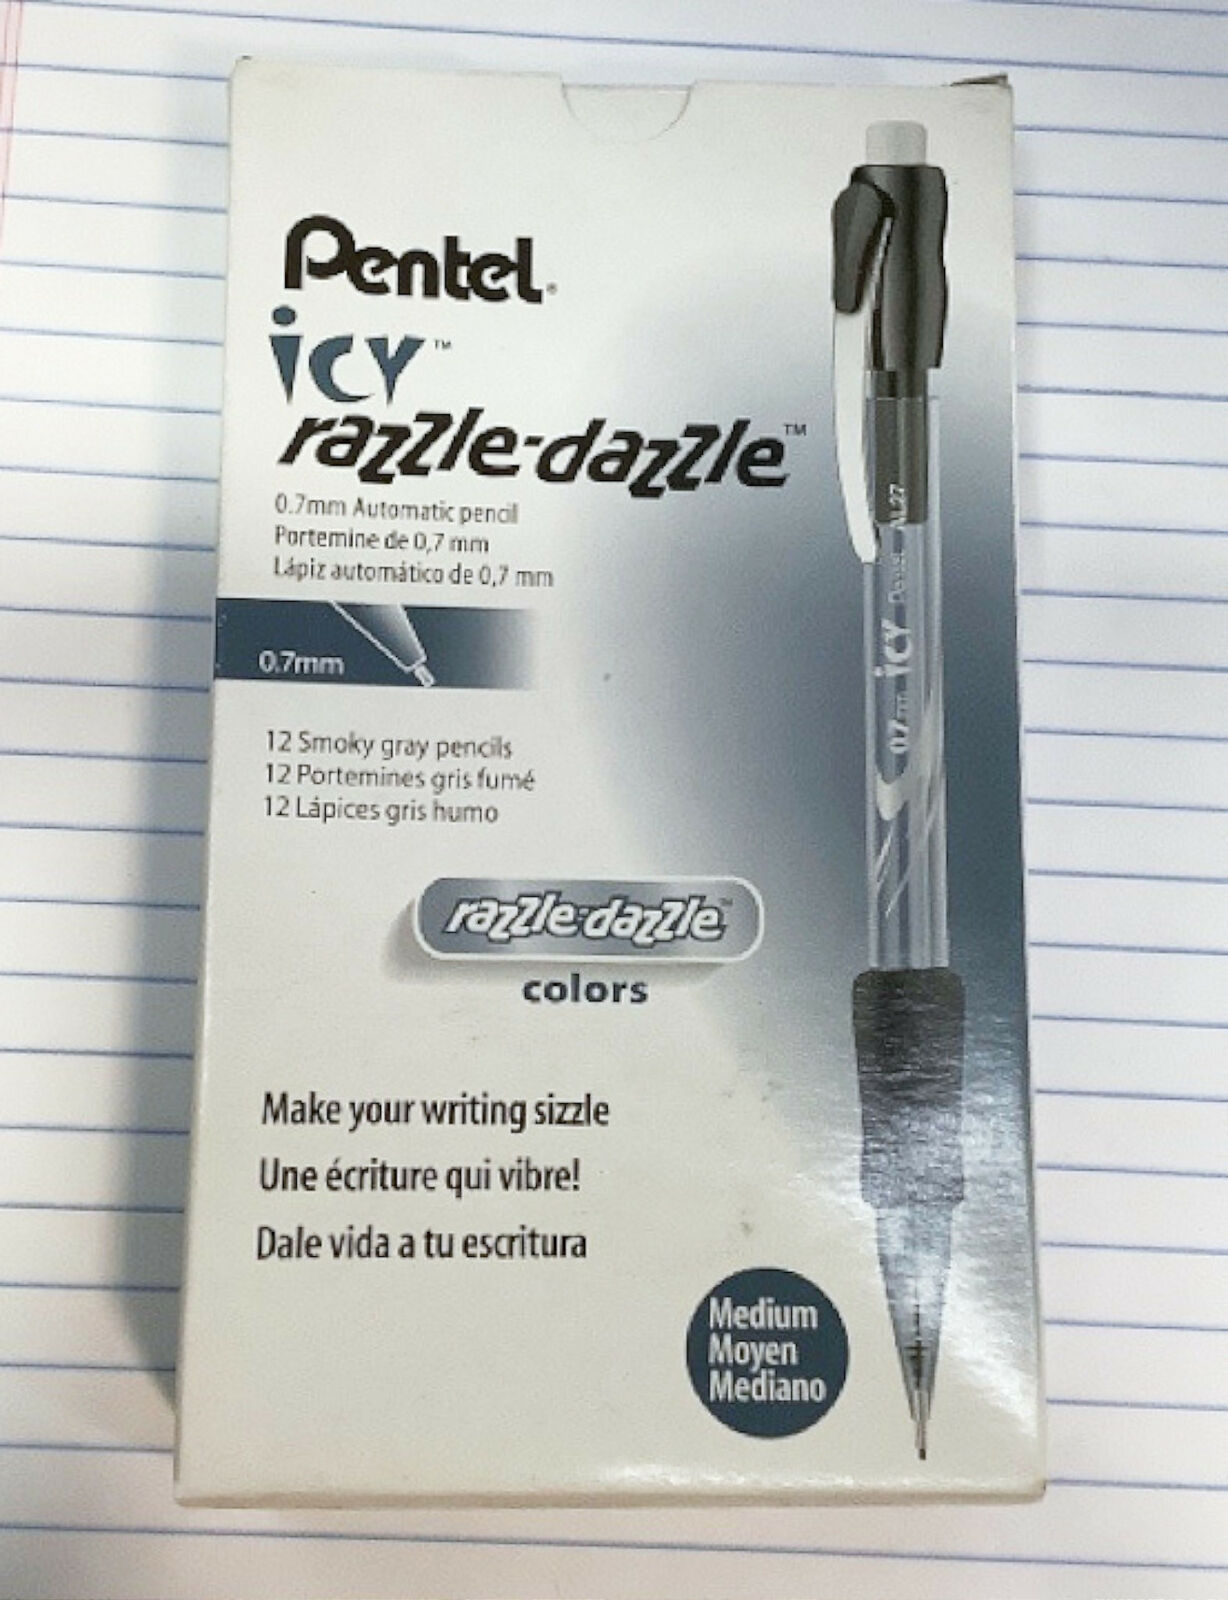 NEW Pentel 12-PACK Icy Razzle-Dazzle 0.7MM Automatic Pencil Smoky Gray Pencils